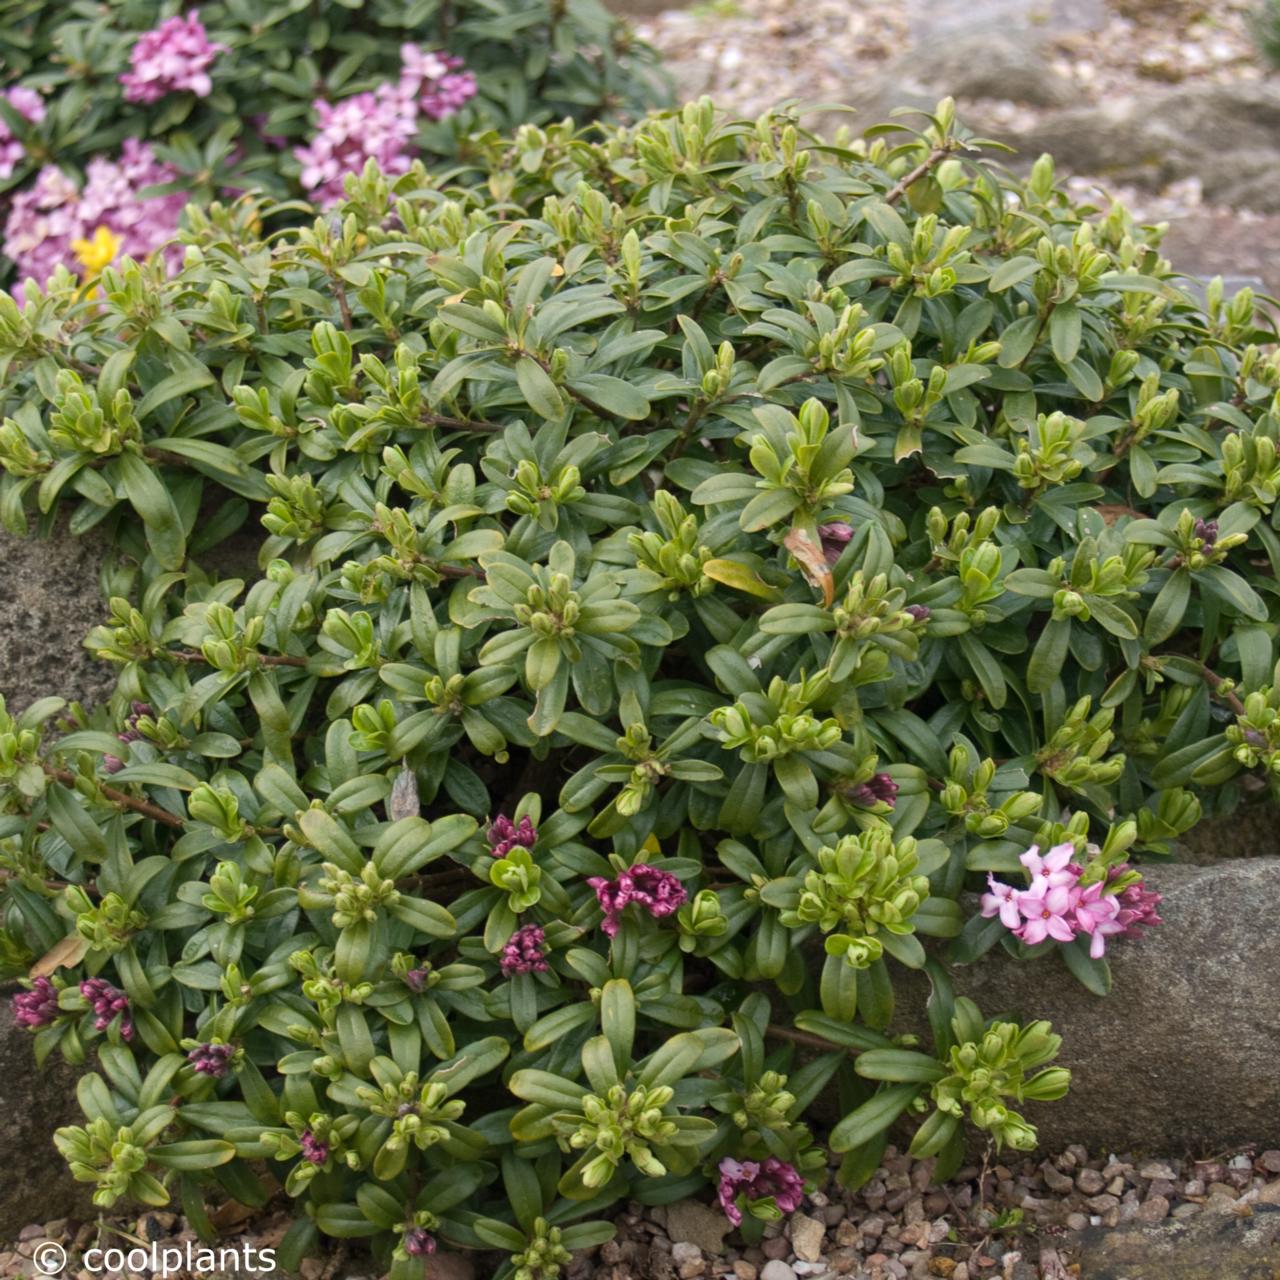 Daphne x napolitana 'Meon' plant